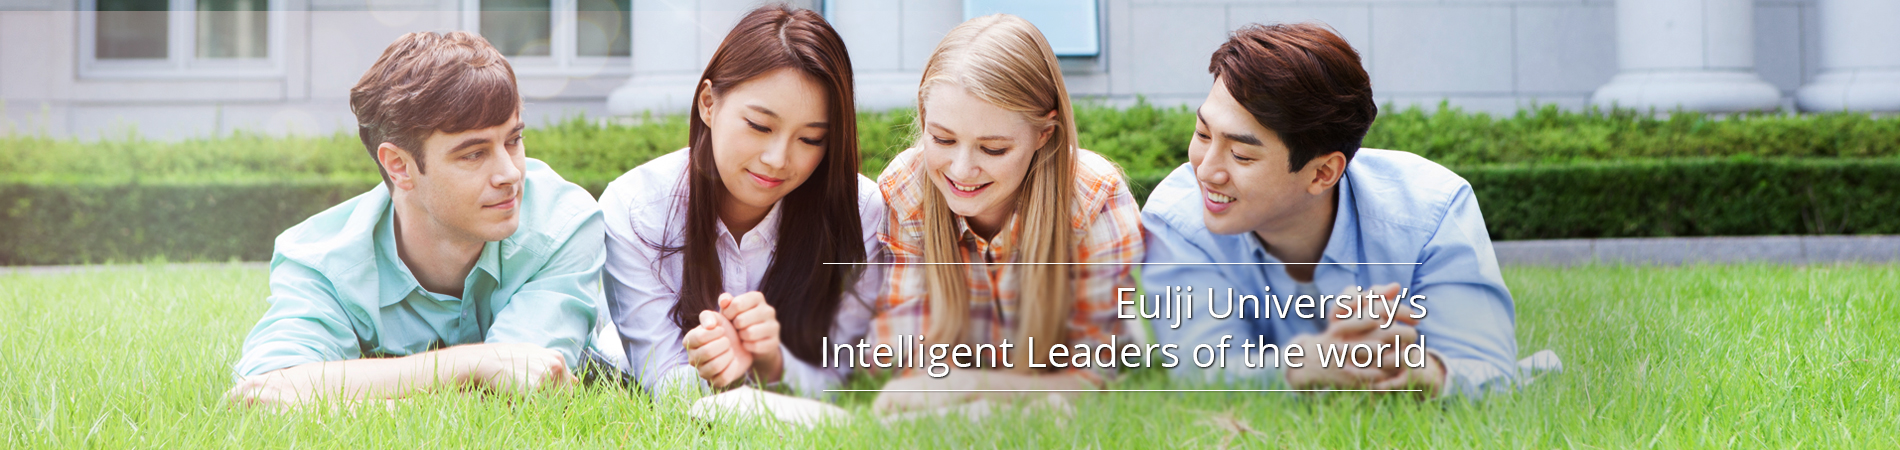 Eulji University’s Intelligent Leaders of the world